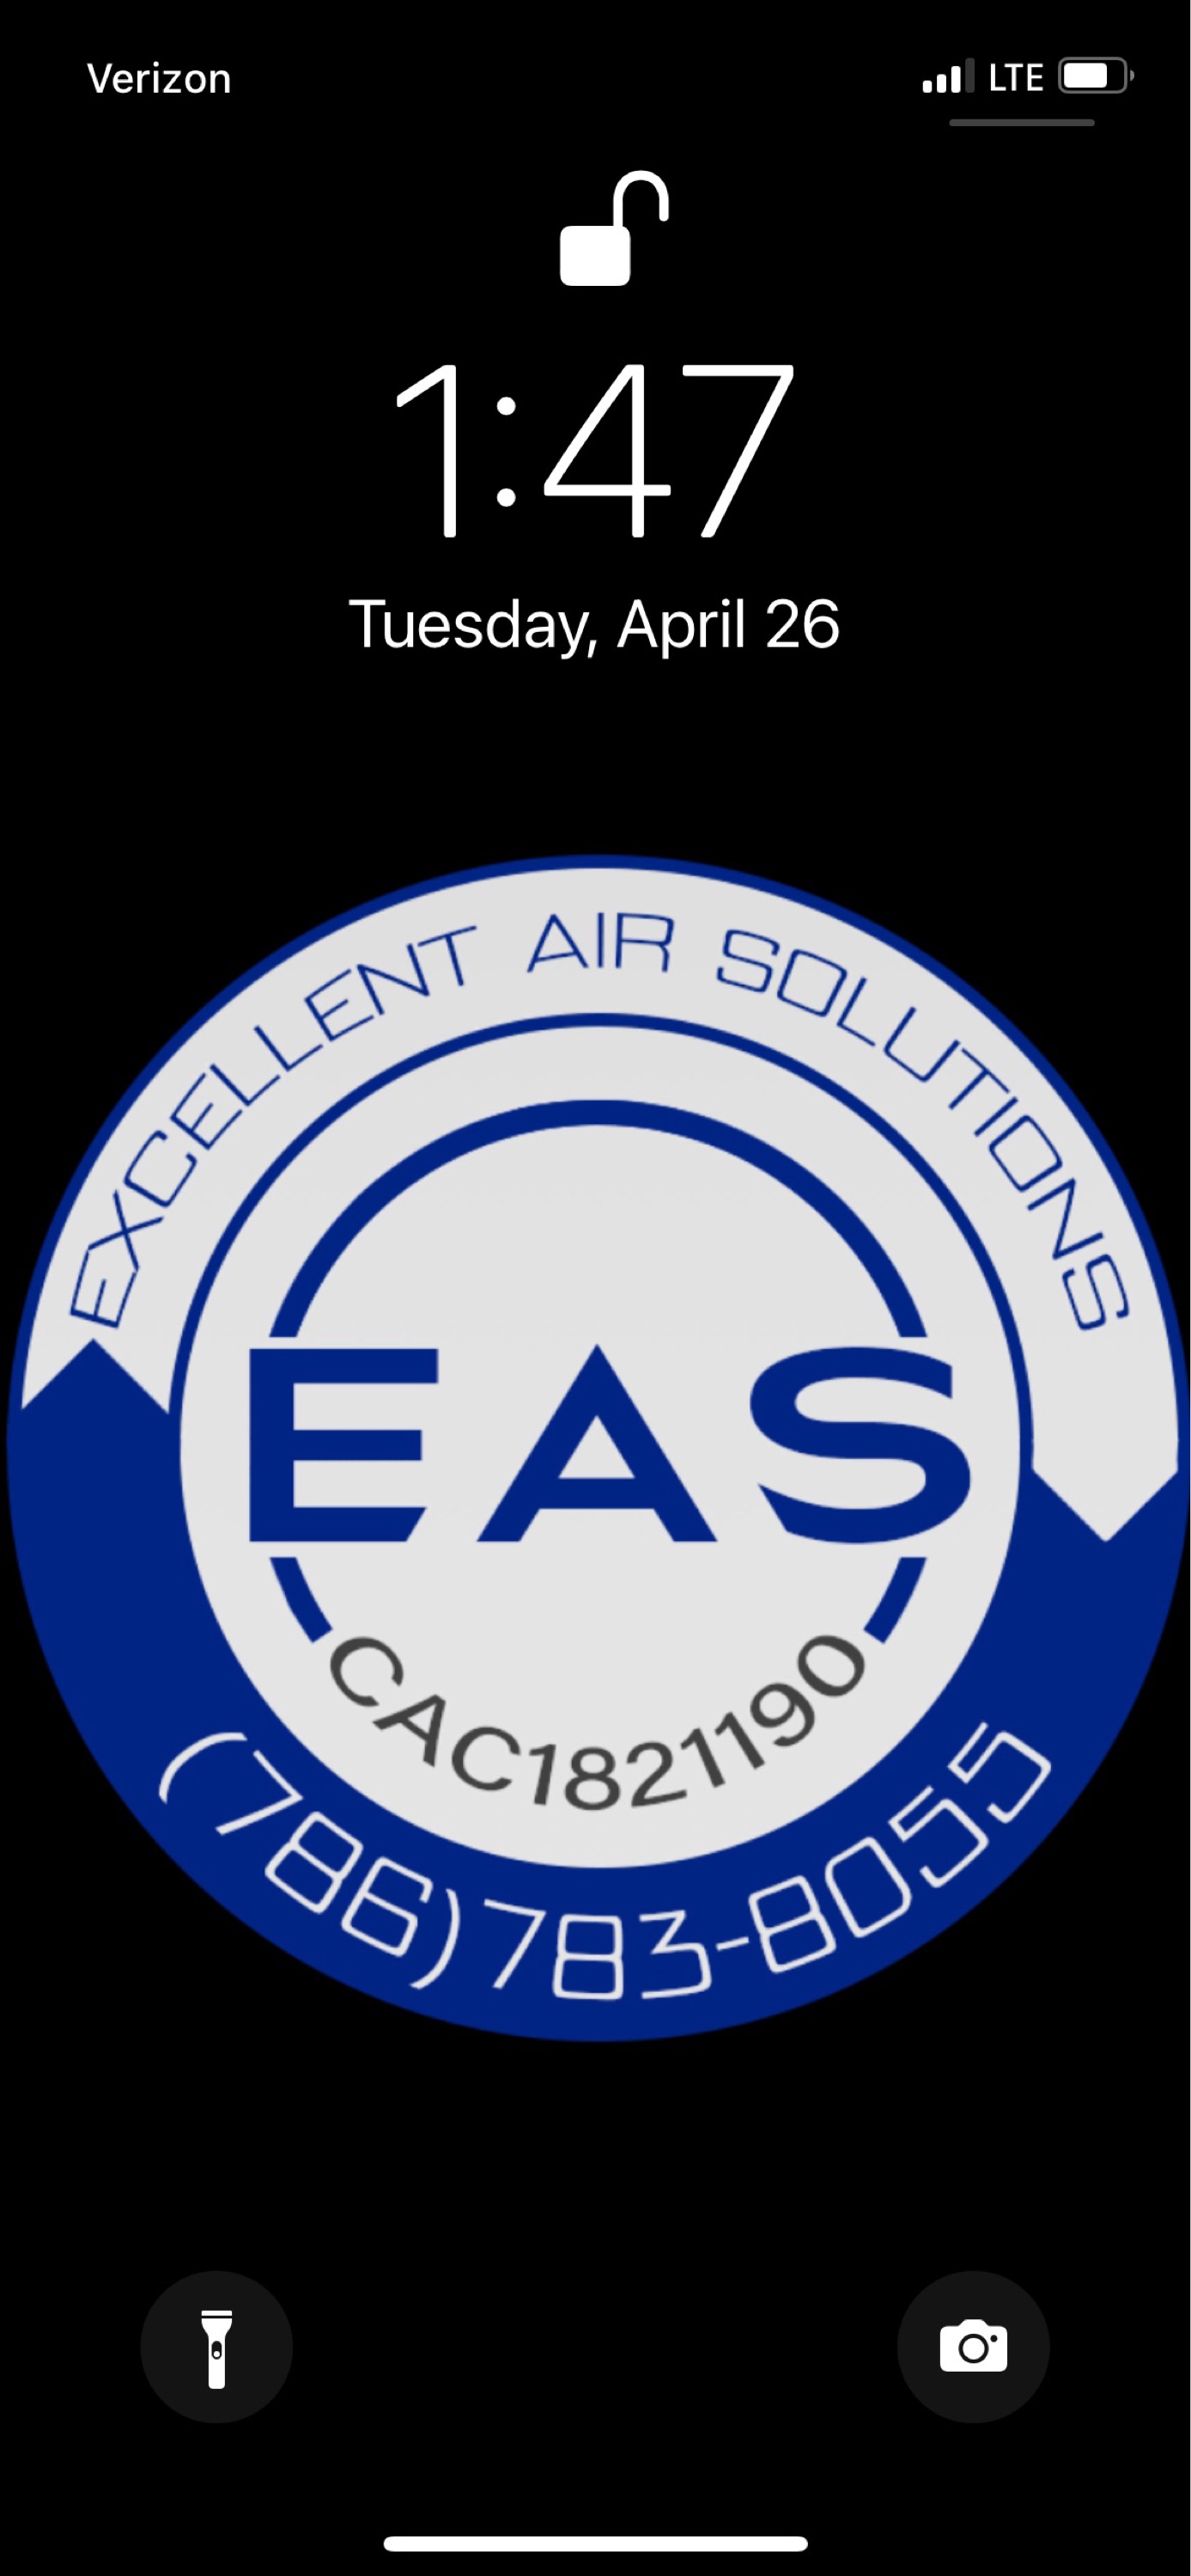 EXCELLENT AIR SOLUTIONS LLC Logo